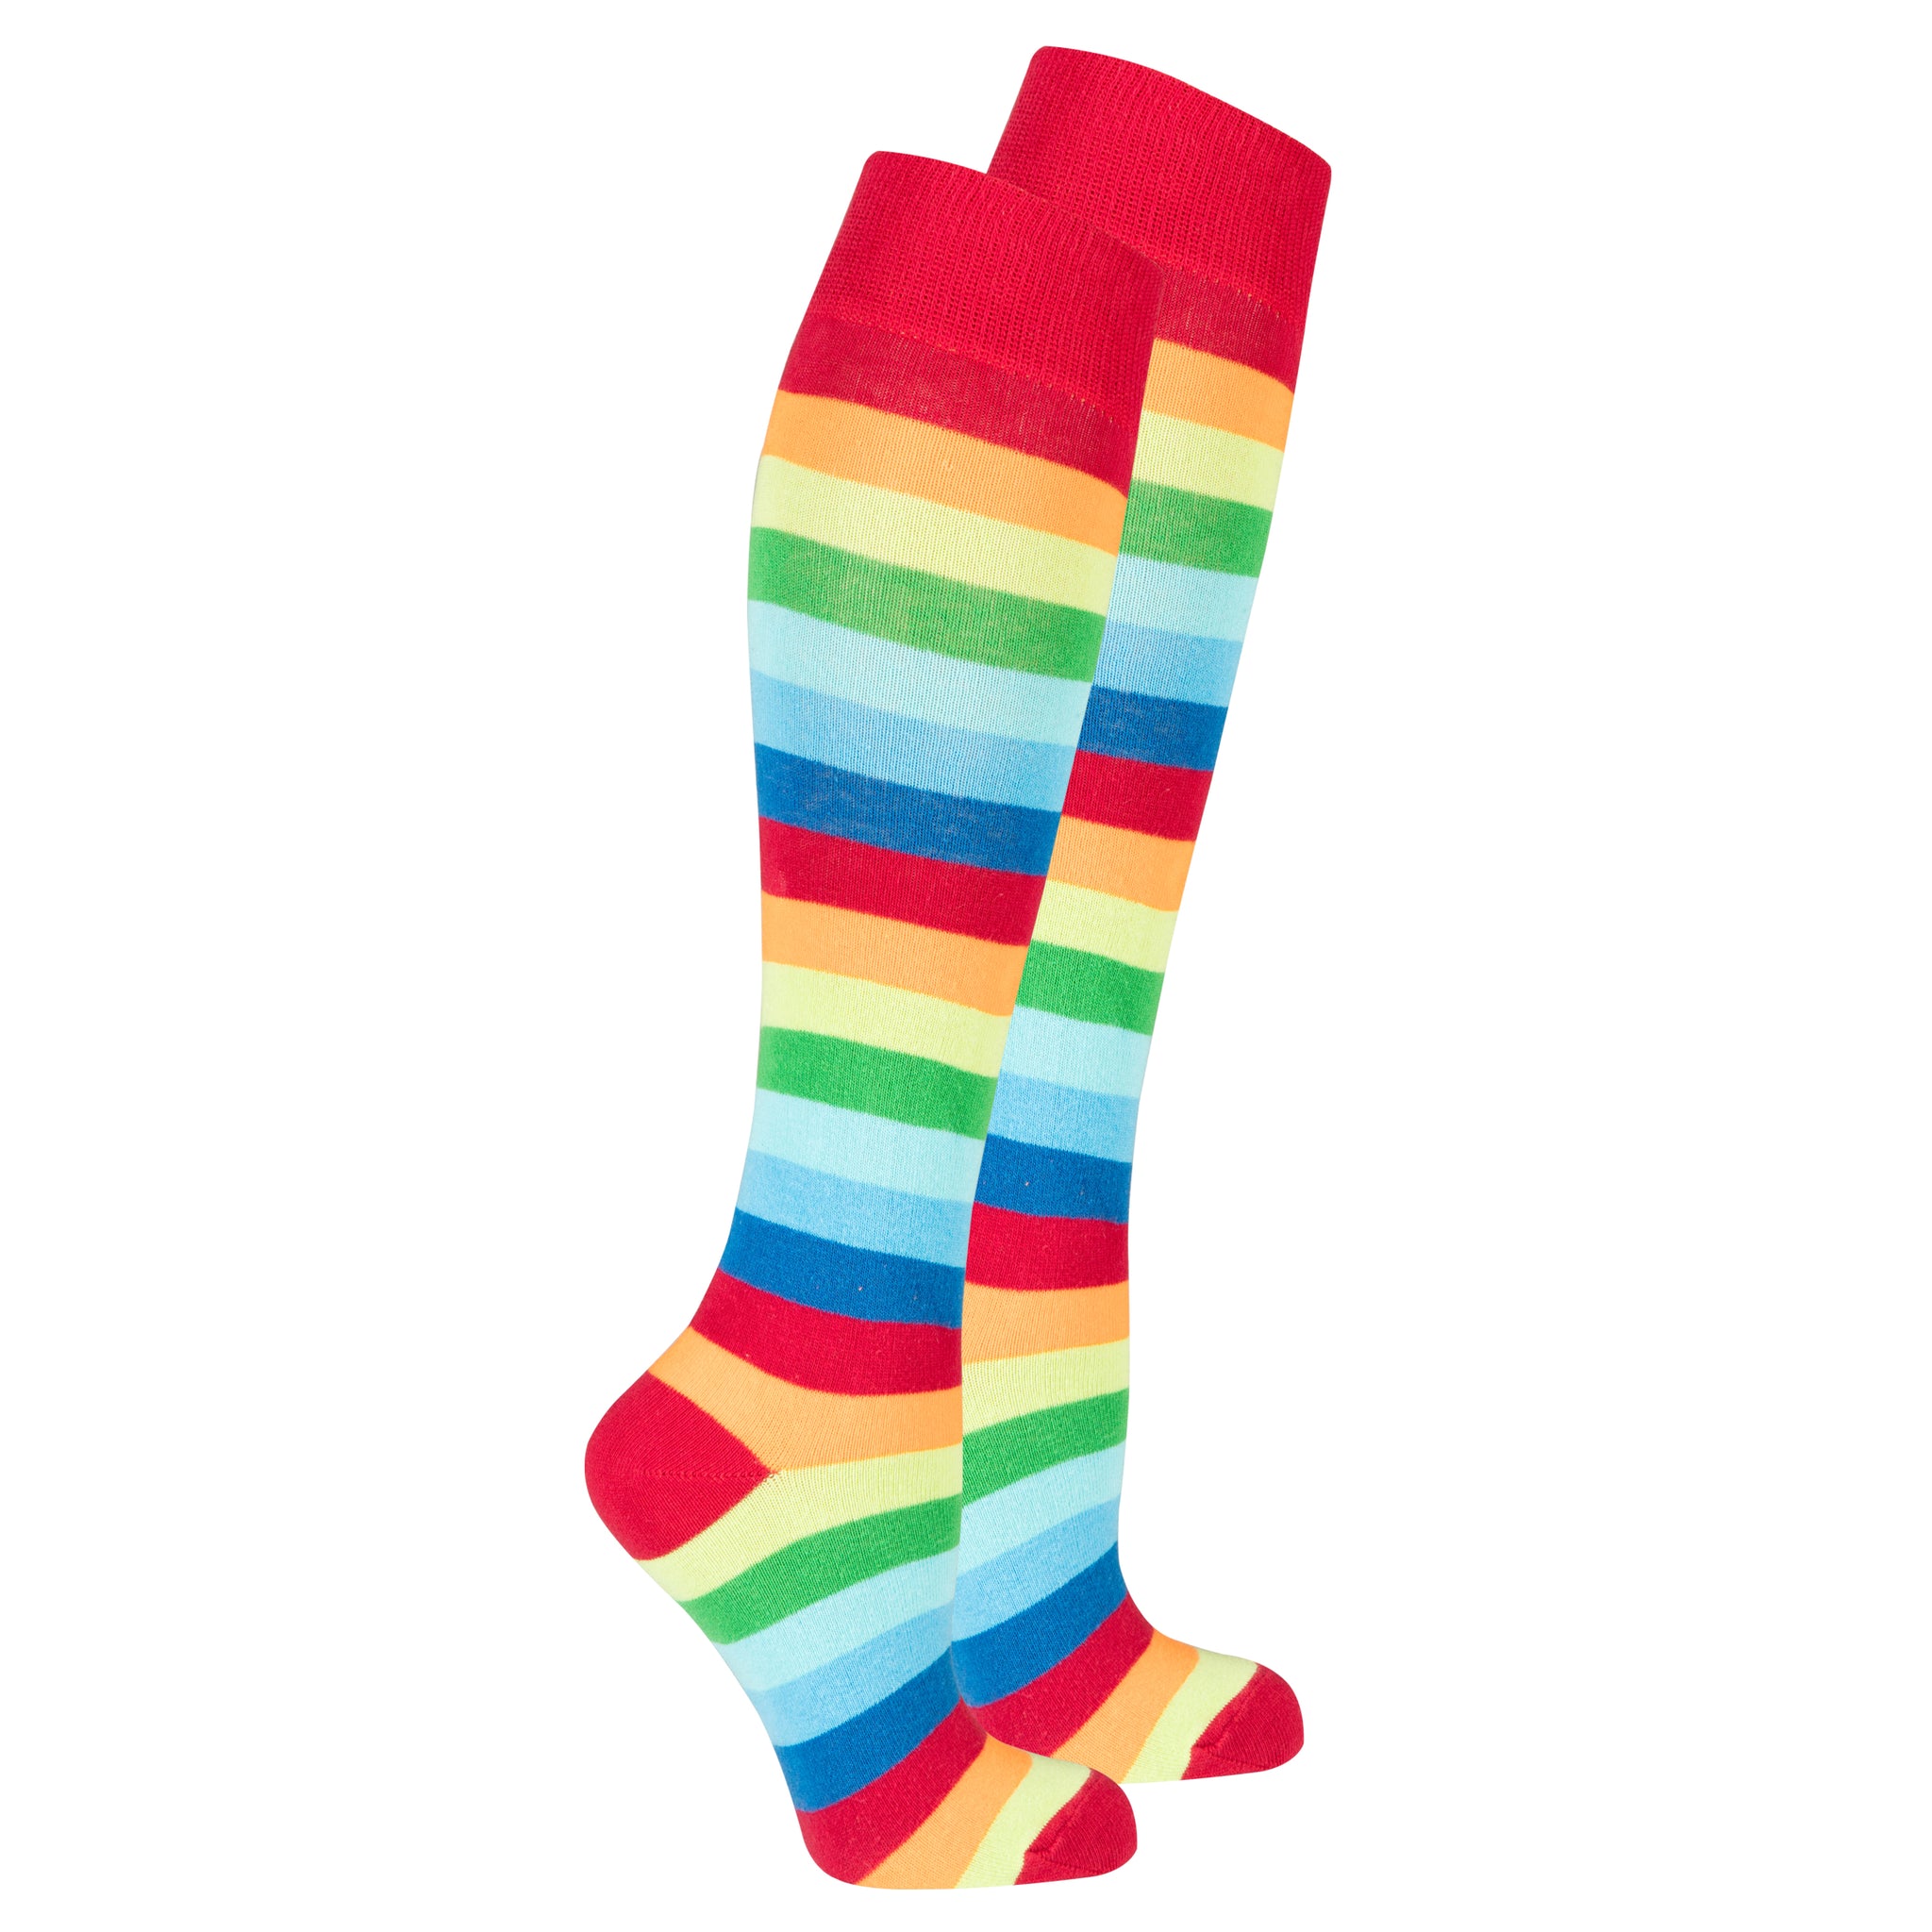 Women's Red Rainbow Stripe Knee High Socks